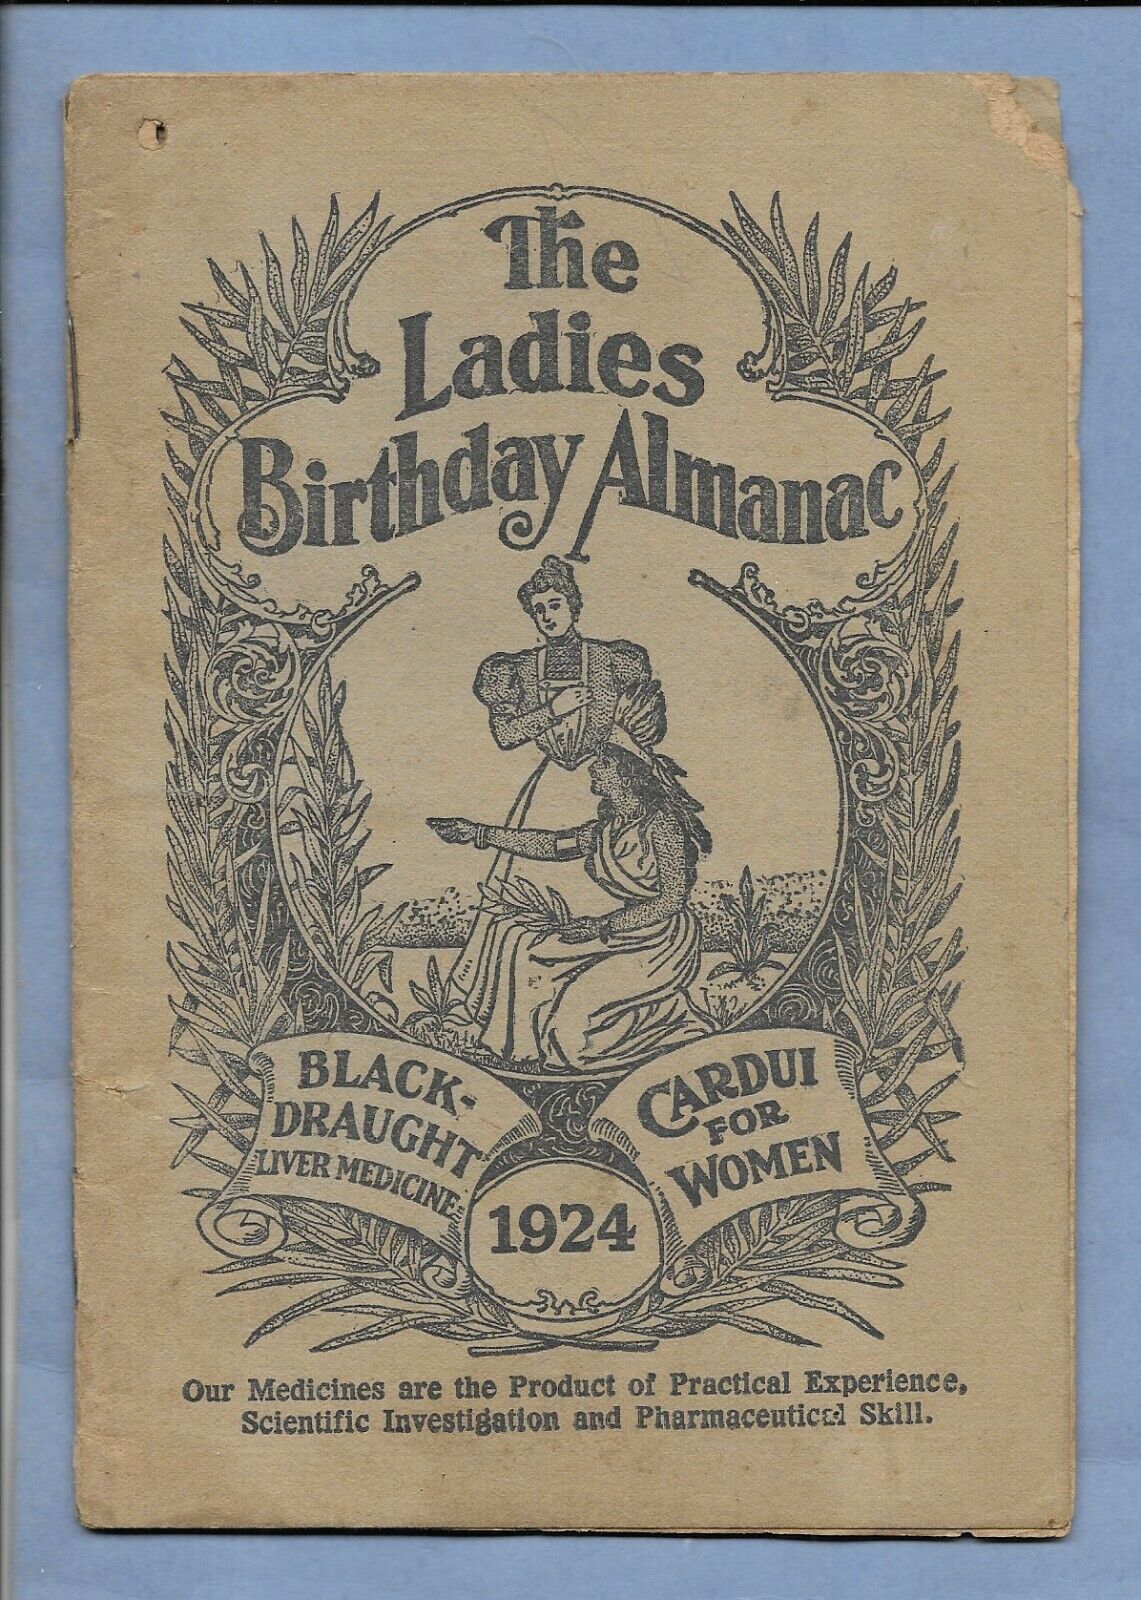 VINTAGE 1924 THE LADIES BIRTHDAY ALMANAC  BLACK DRAUGHT LIVER MEDICINE